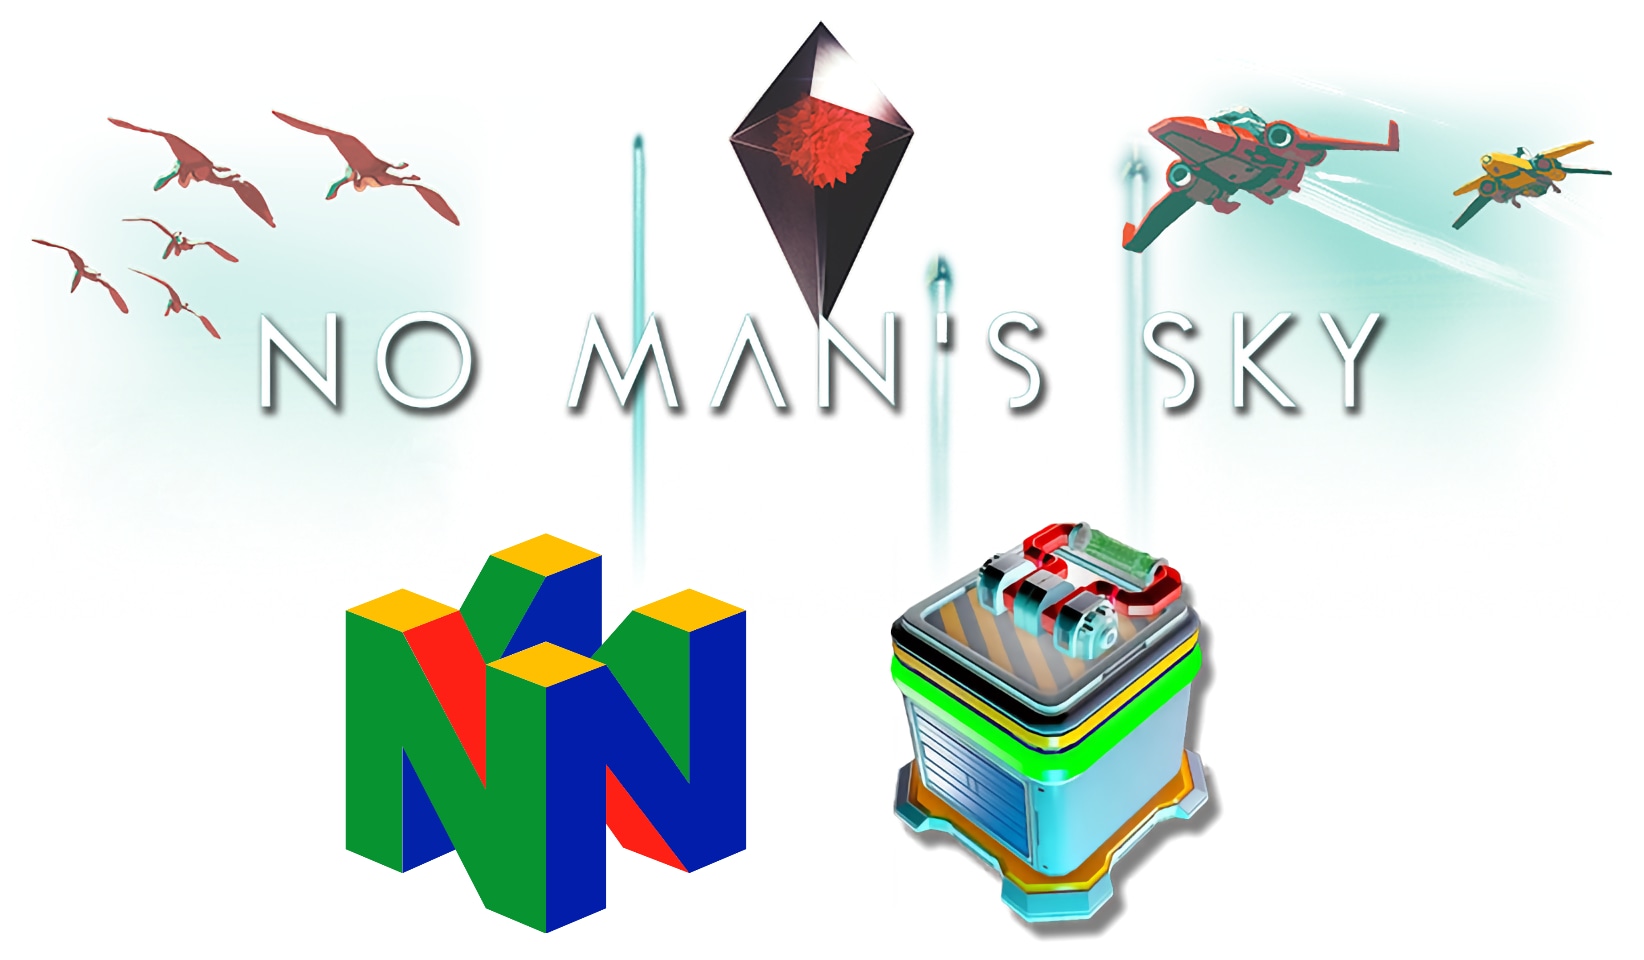 "No Man's Sky" _on_ Nintendo Switch